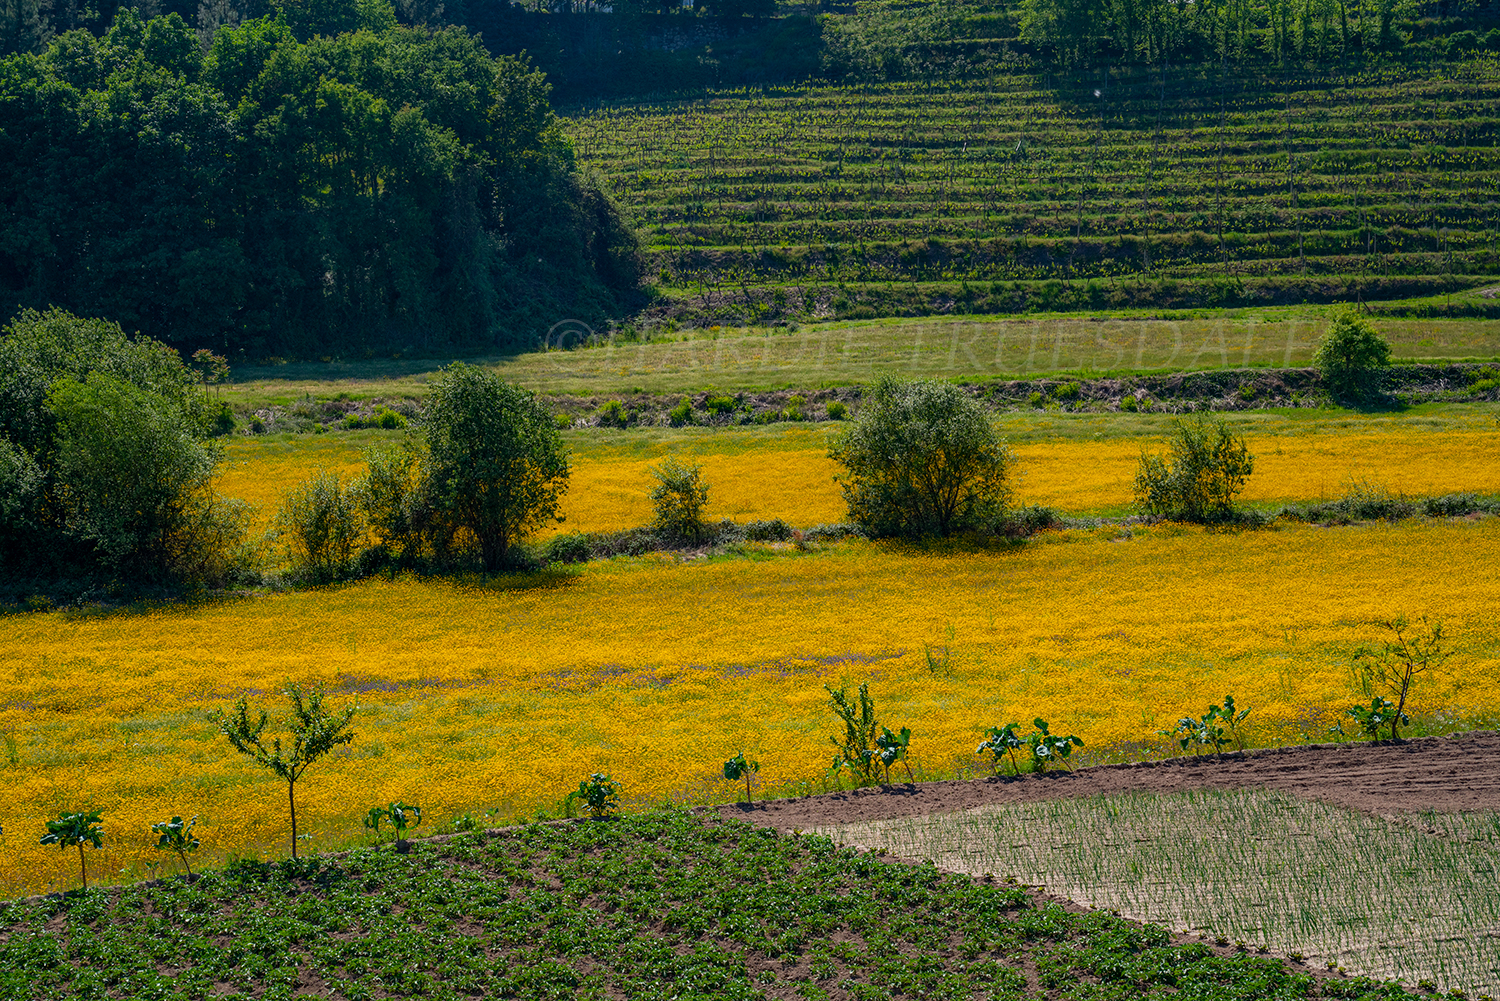 PT#024 "Farm Field and Mustard Grass" Camino Santiago Torres